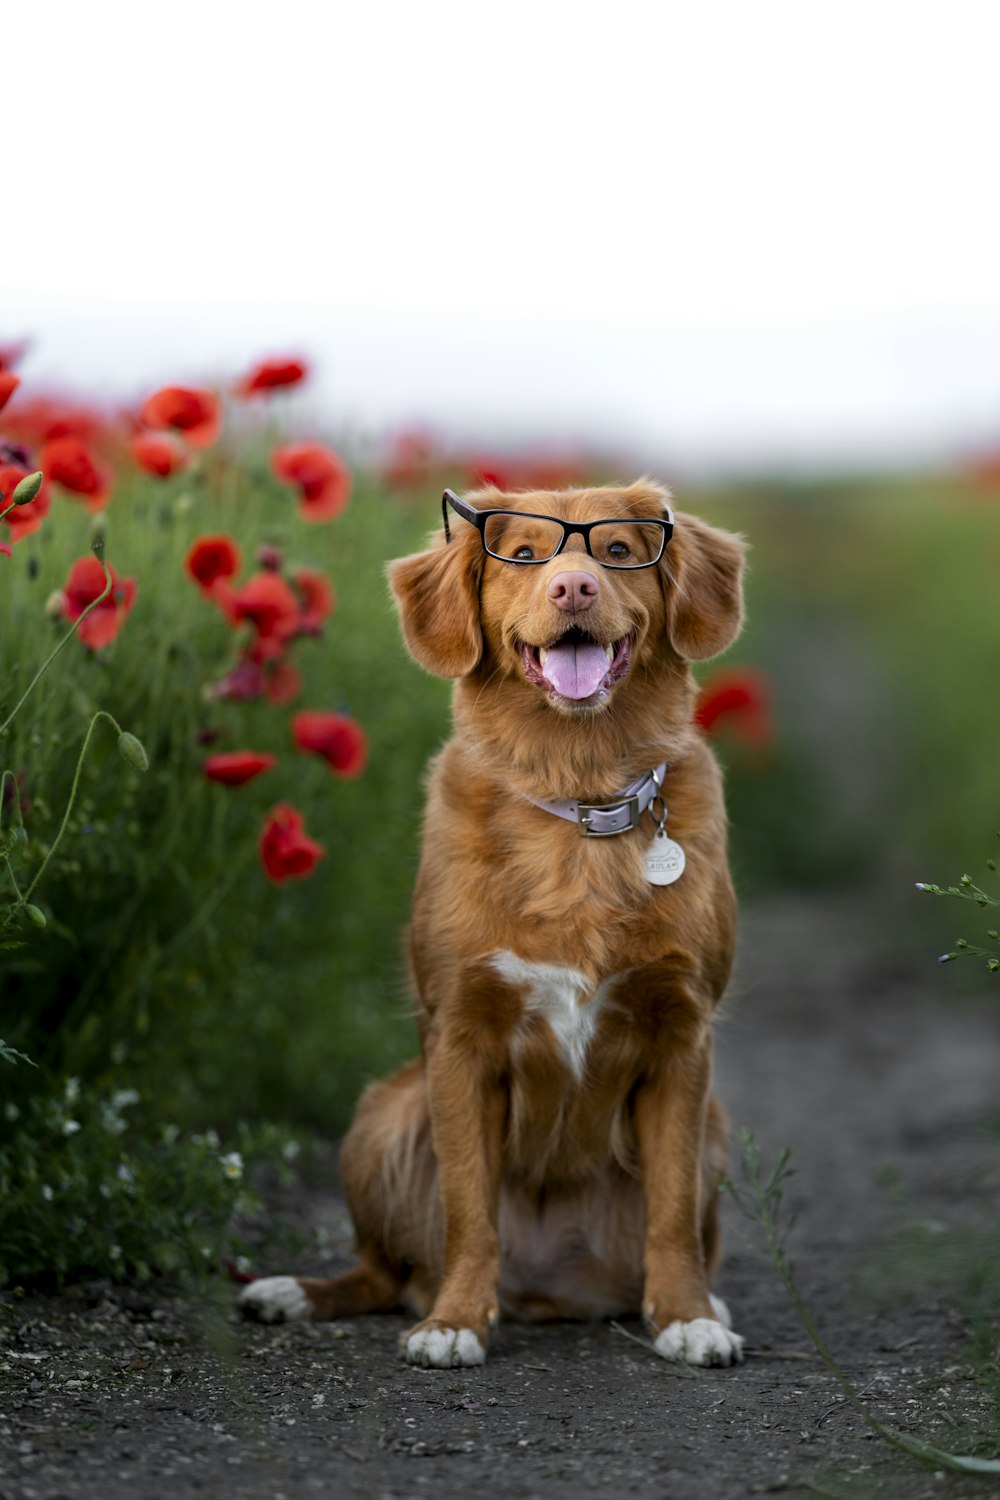 brauner kurzhaariger Hund tagsüber auf grünem Grasfeld